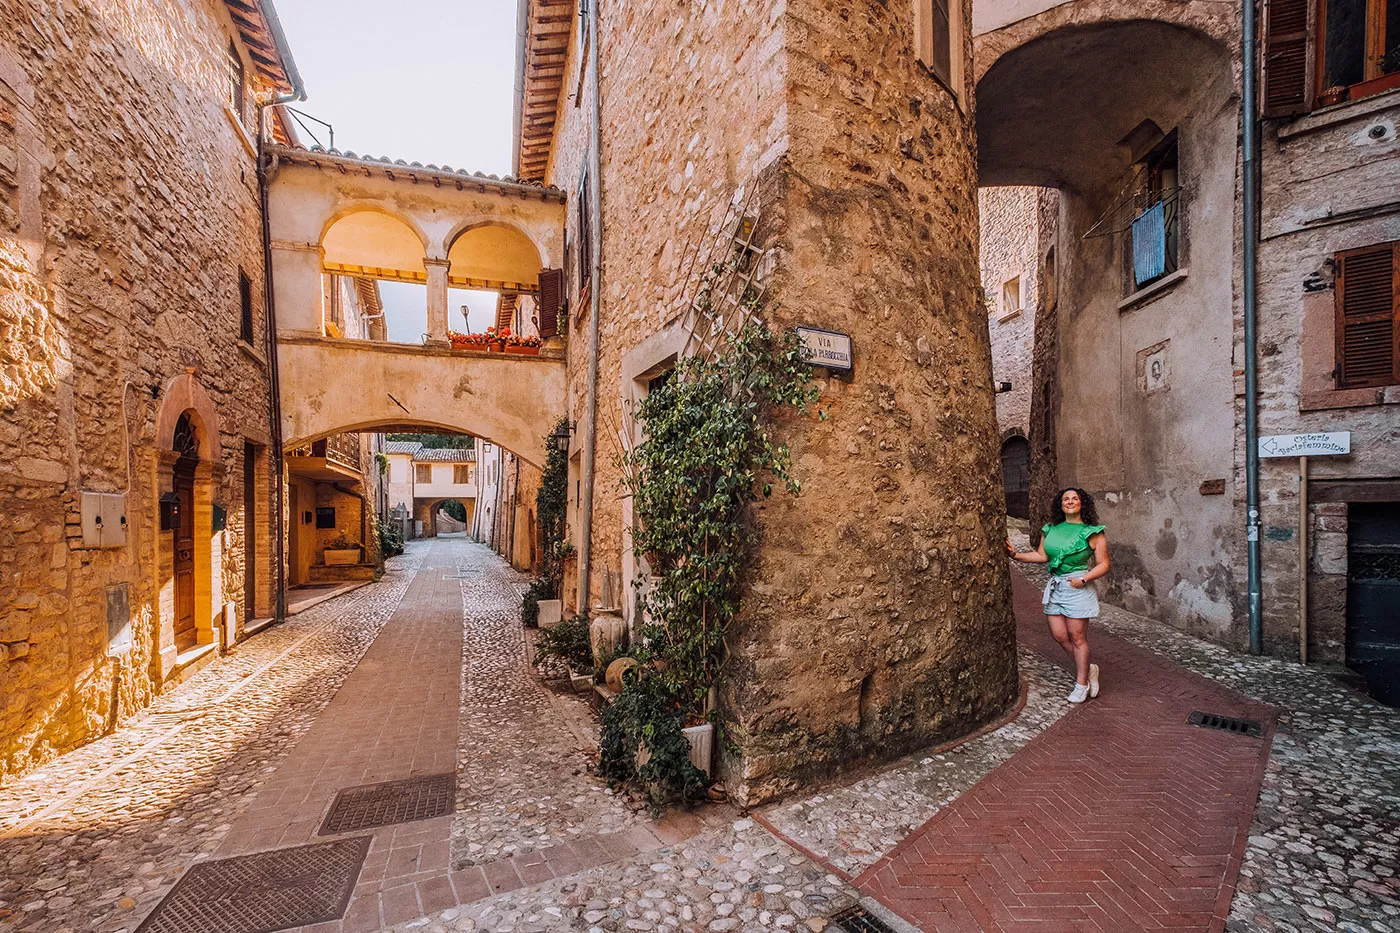 Things to do in Umbria Italy - Visit Scheggino